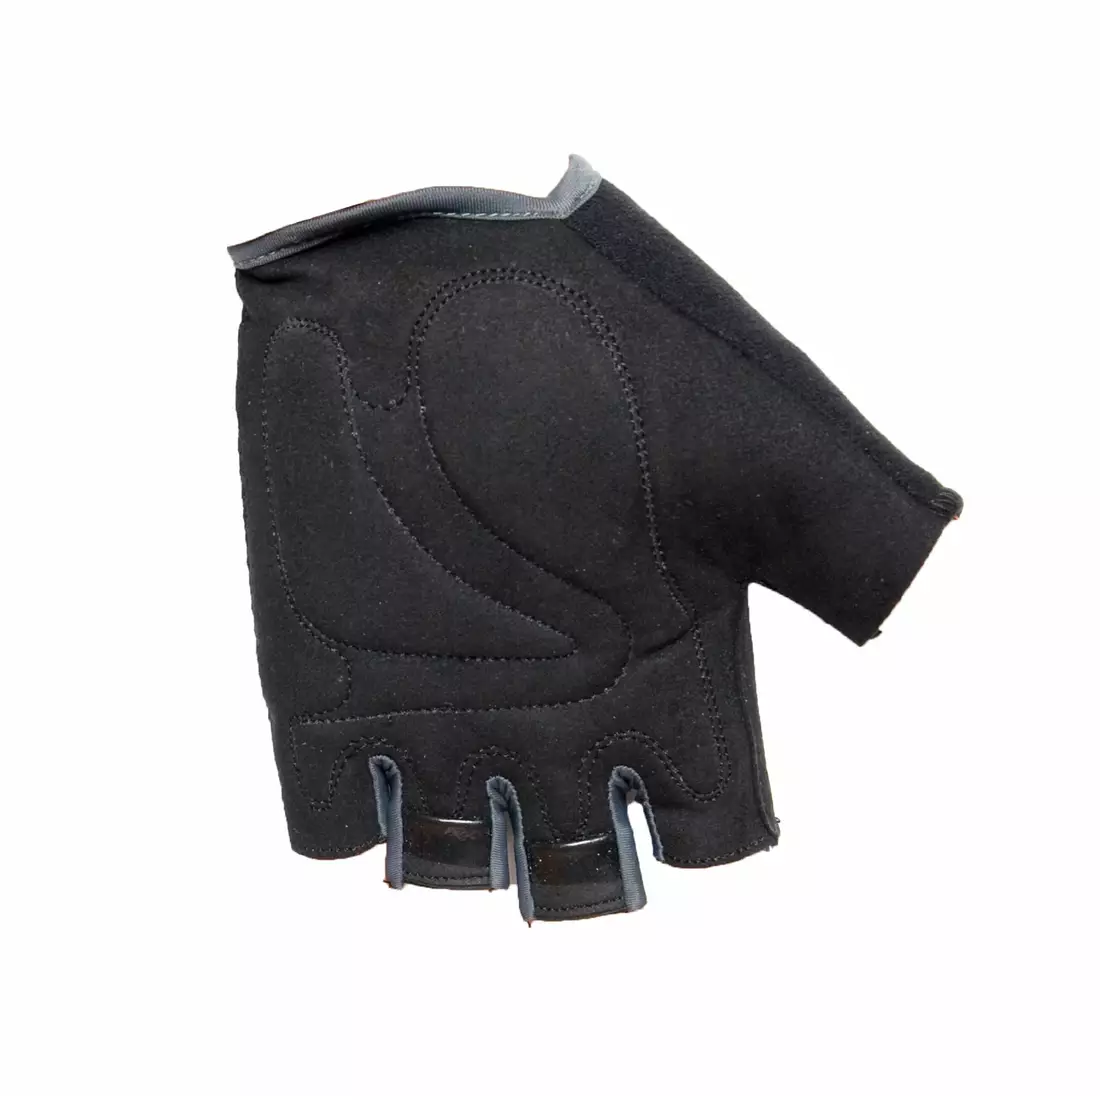 POLEDNIK ZERO cycling gloves black